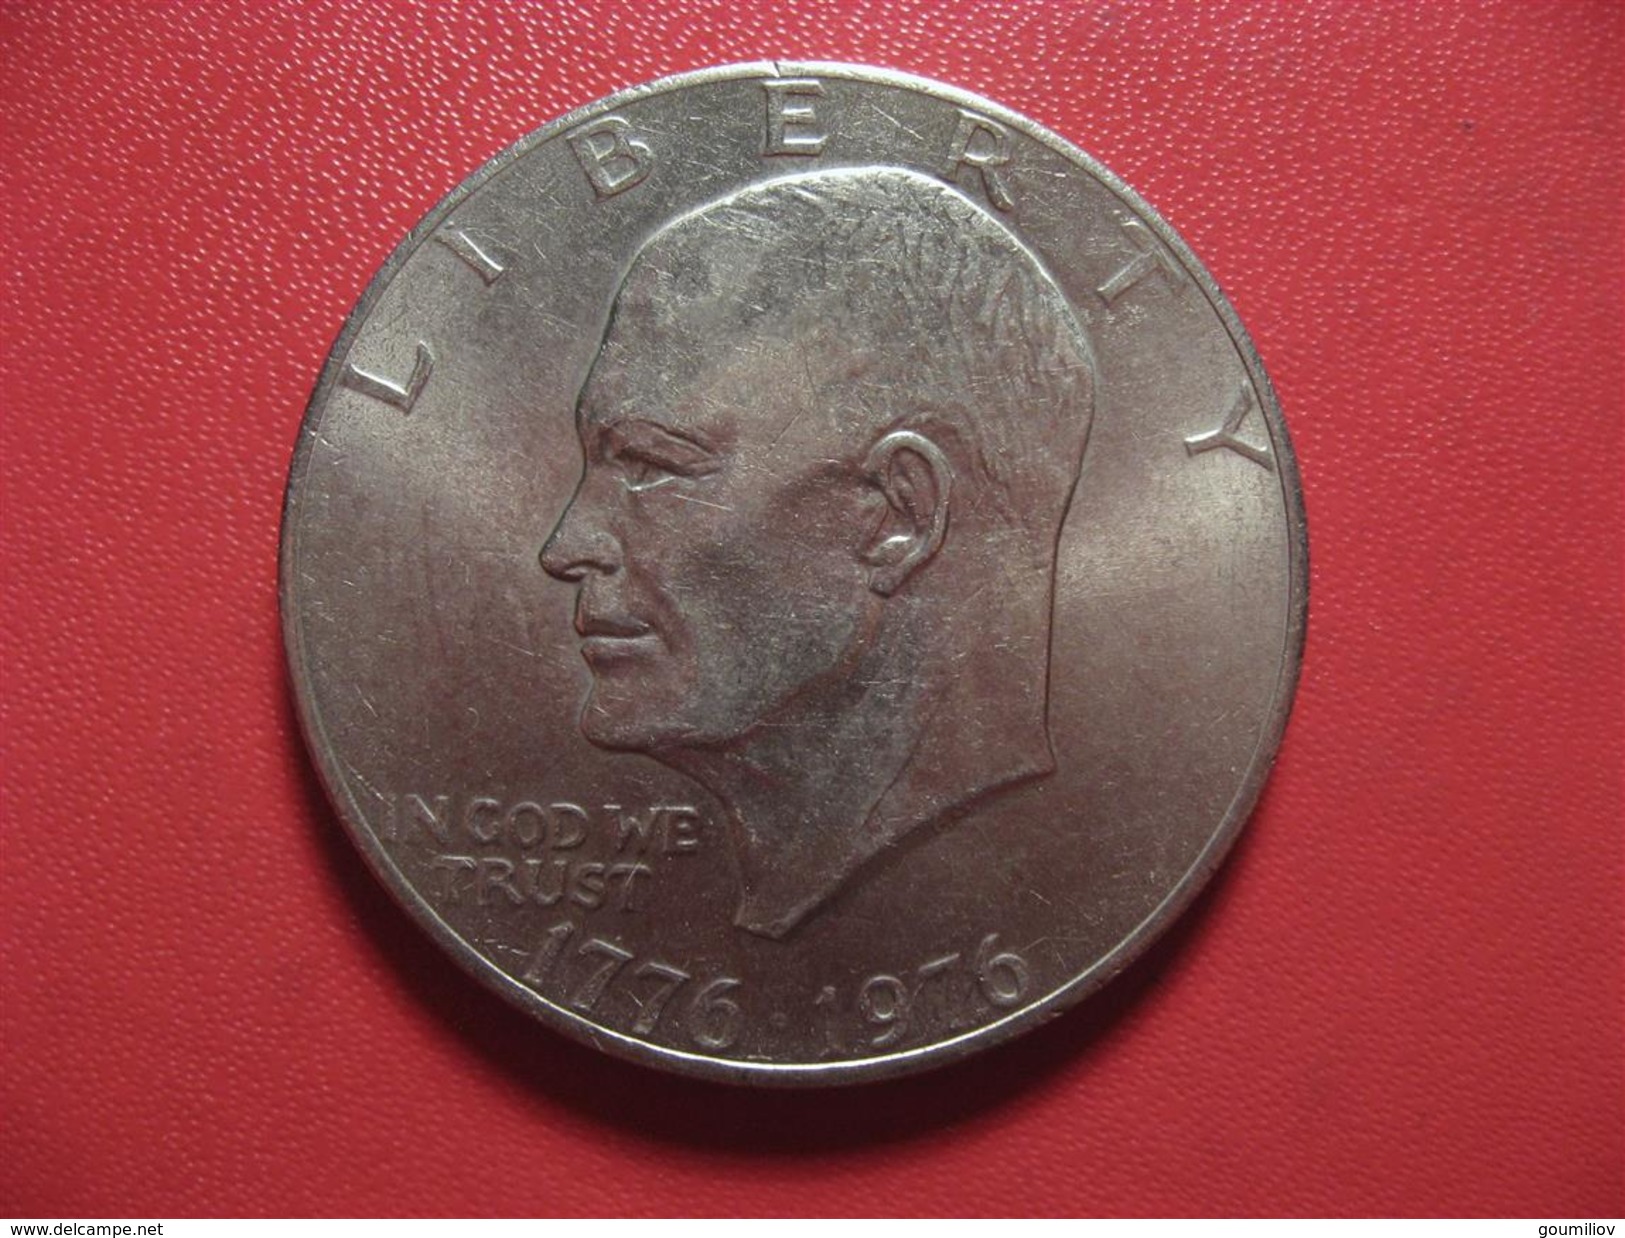 Etats-Unis - USA - One Dollar 1776-1976 2210 - Commemoratives